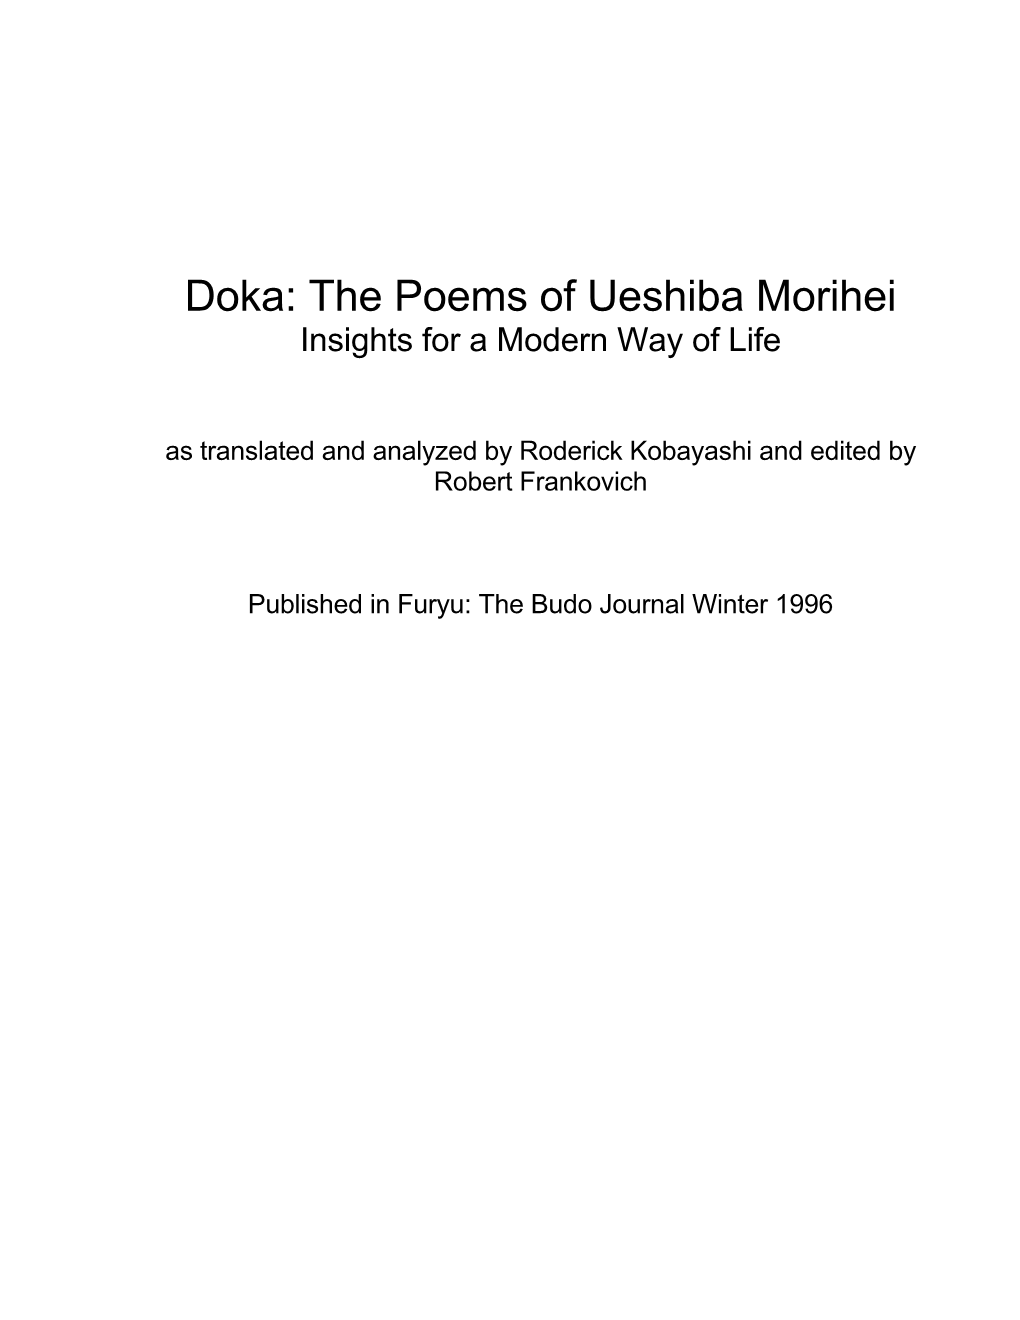 Aikido Doka: the Poems of Ueshiba Morihei